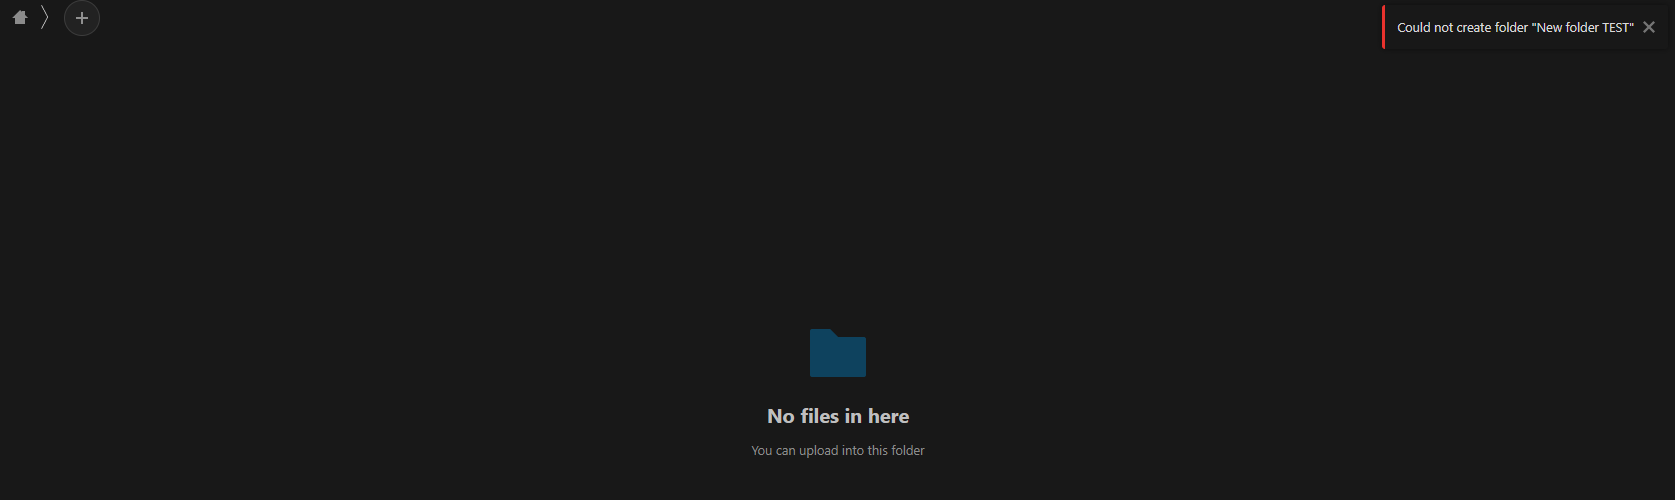 nextcloud cannot create folder 2.png